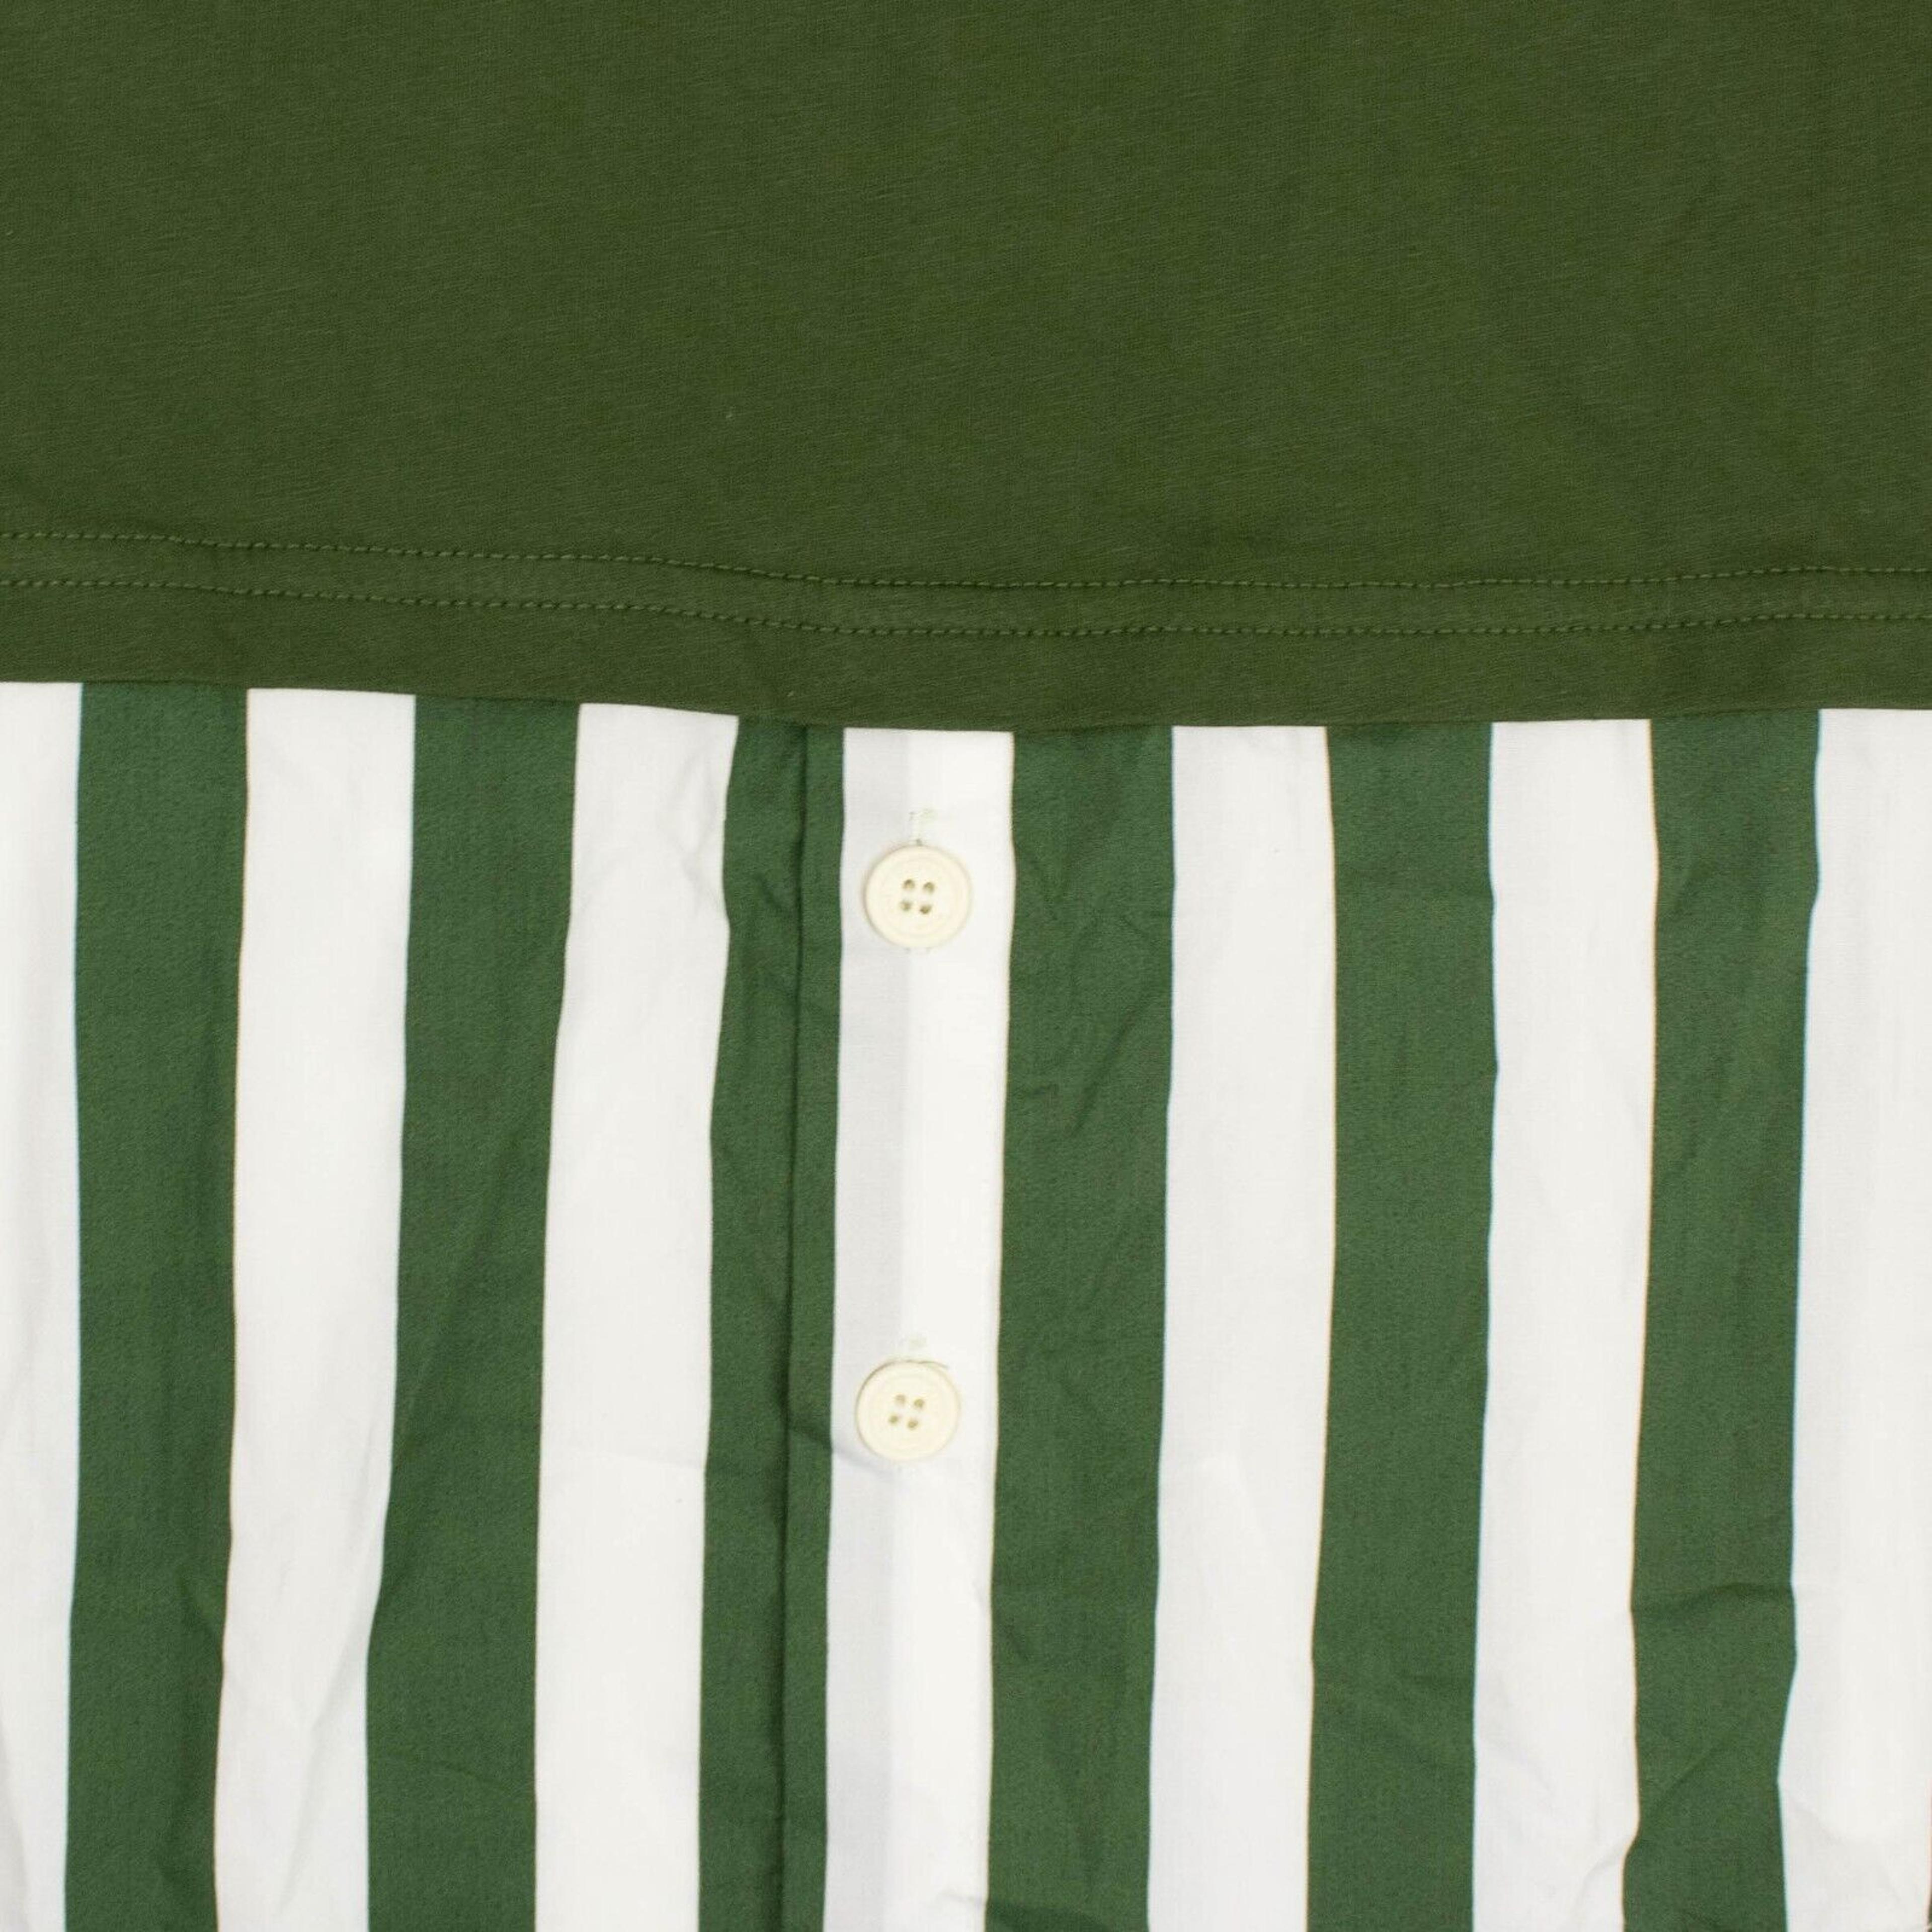 Alternate View 6 of Men'S T-Shirts - Green/White